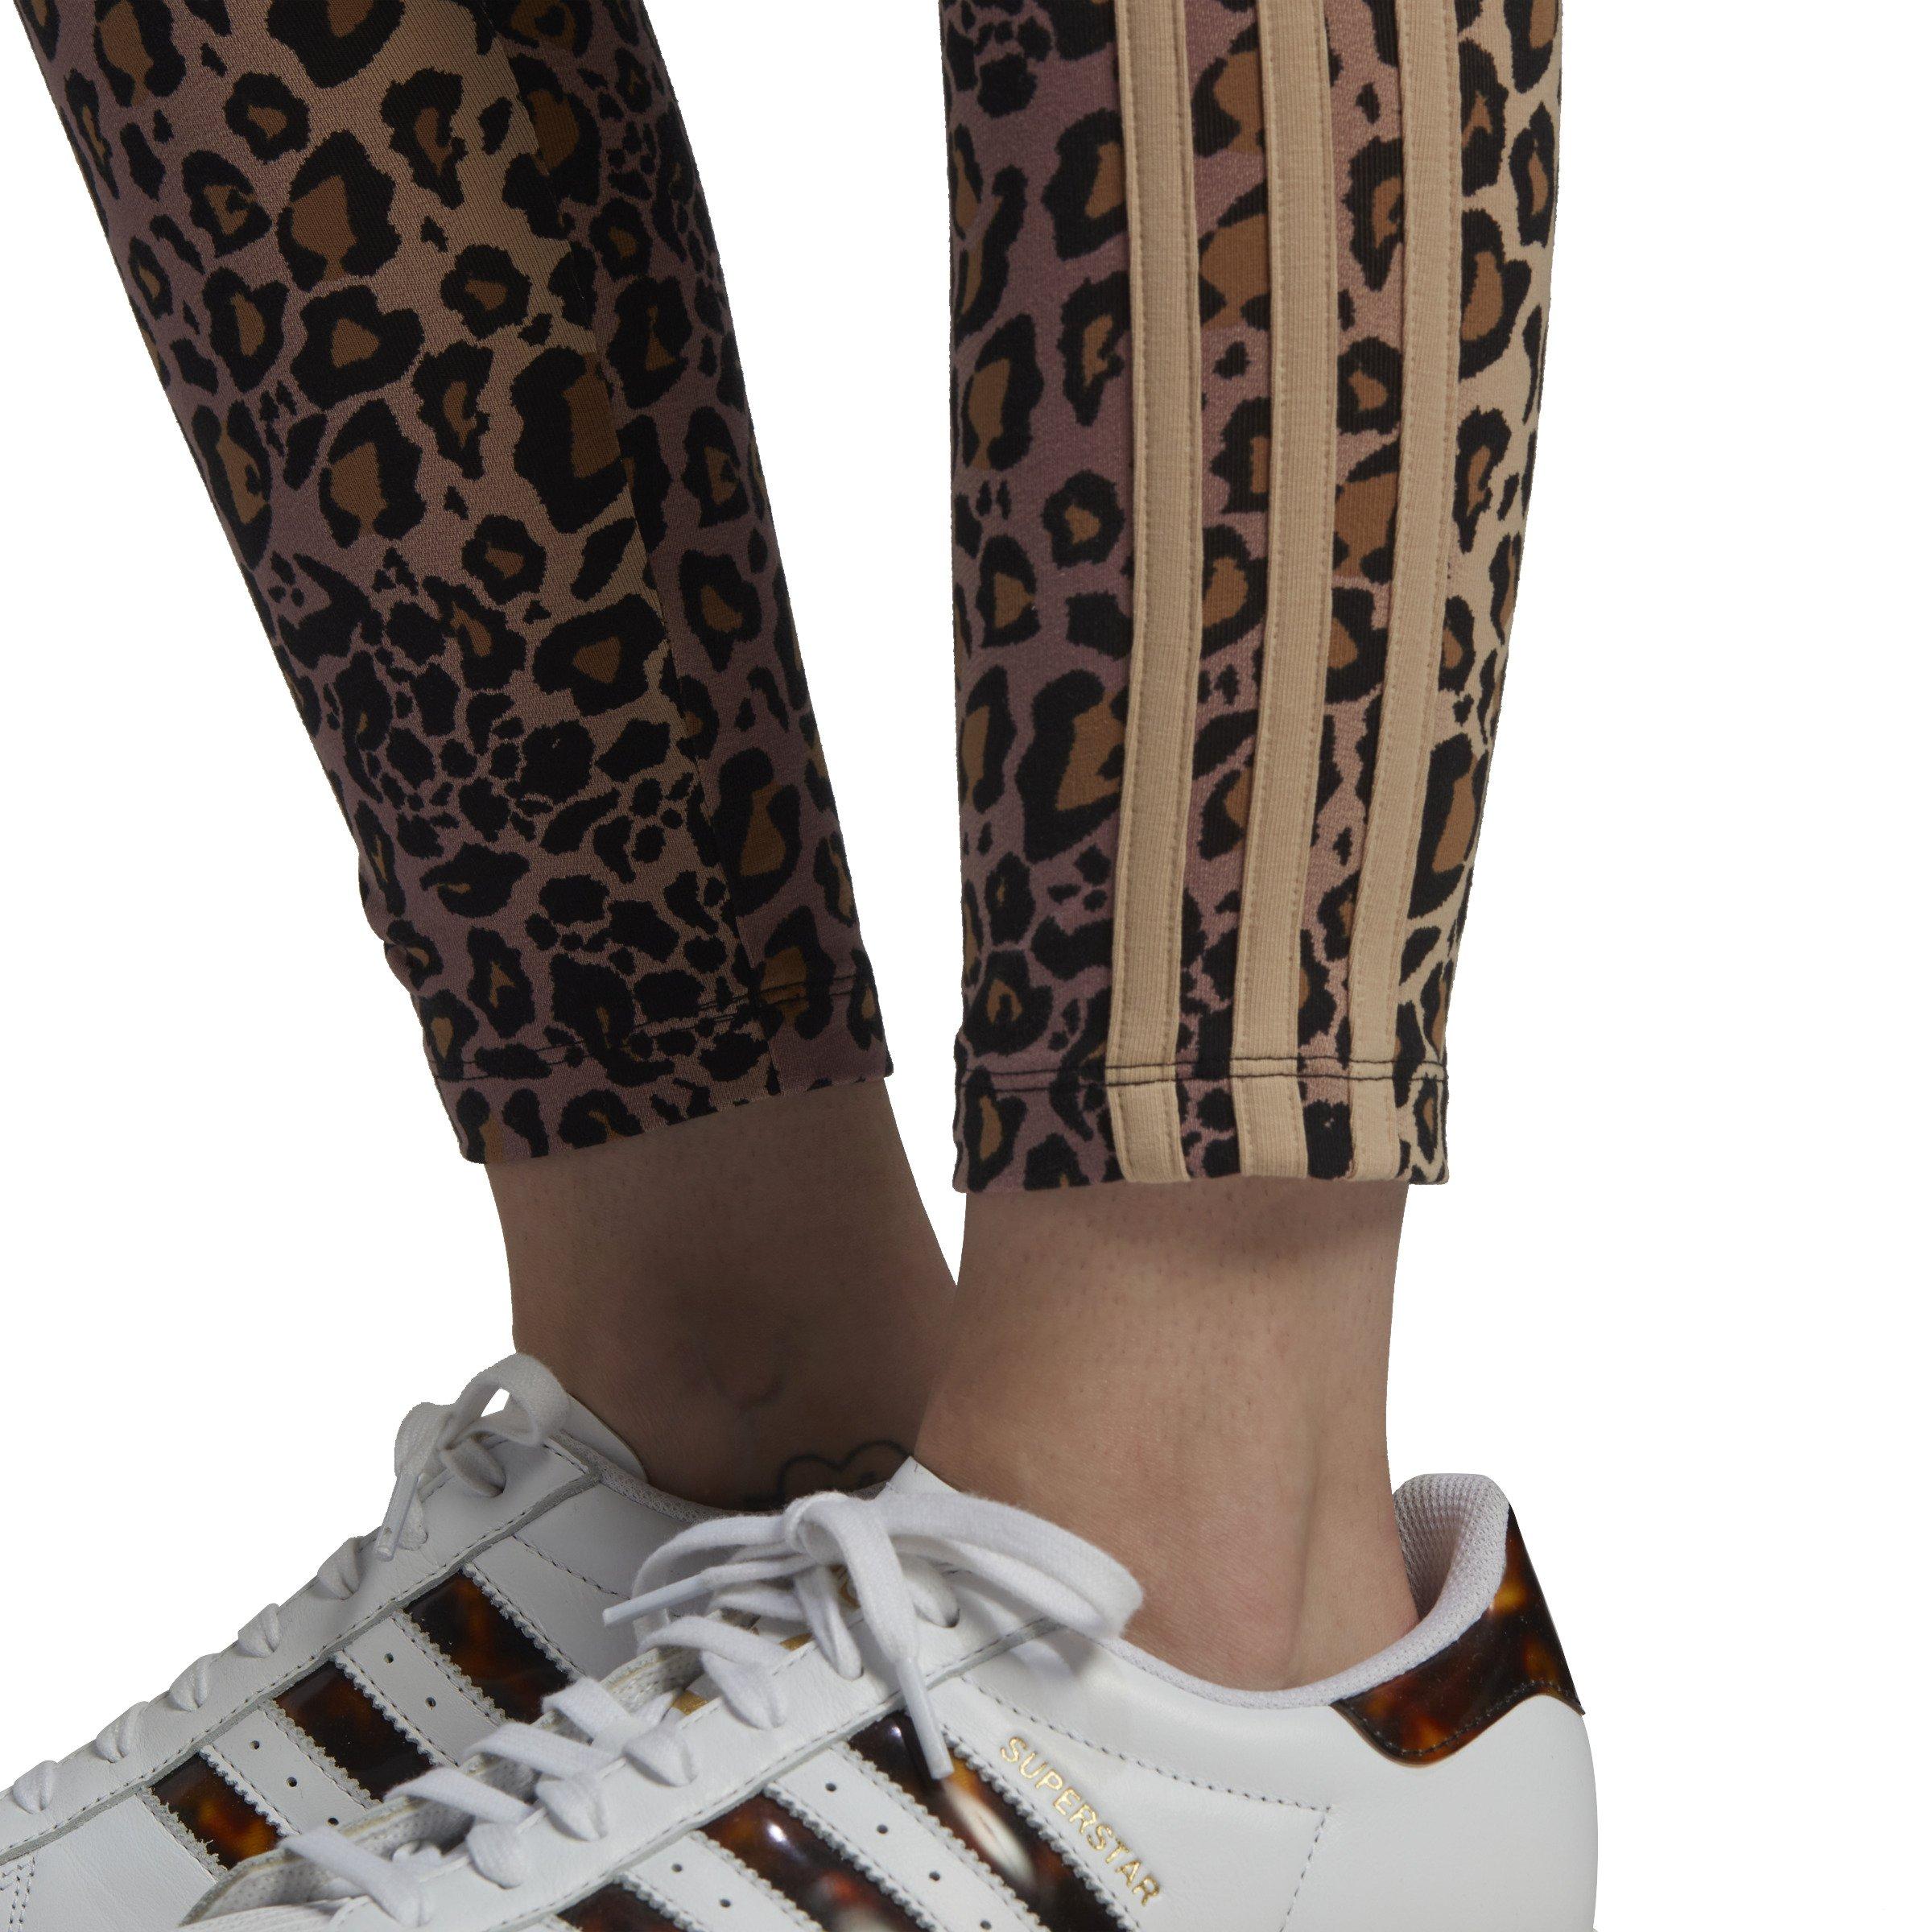 adidas Women's Pink Leopard Print Leggings - Hibbett